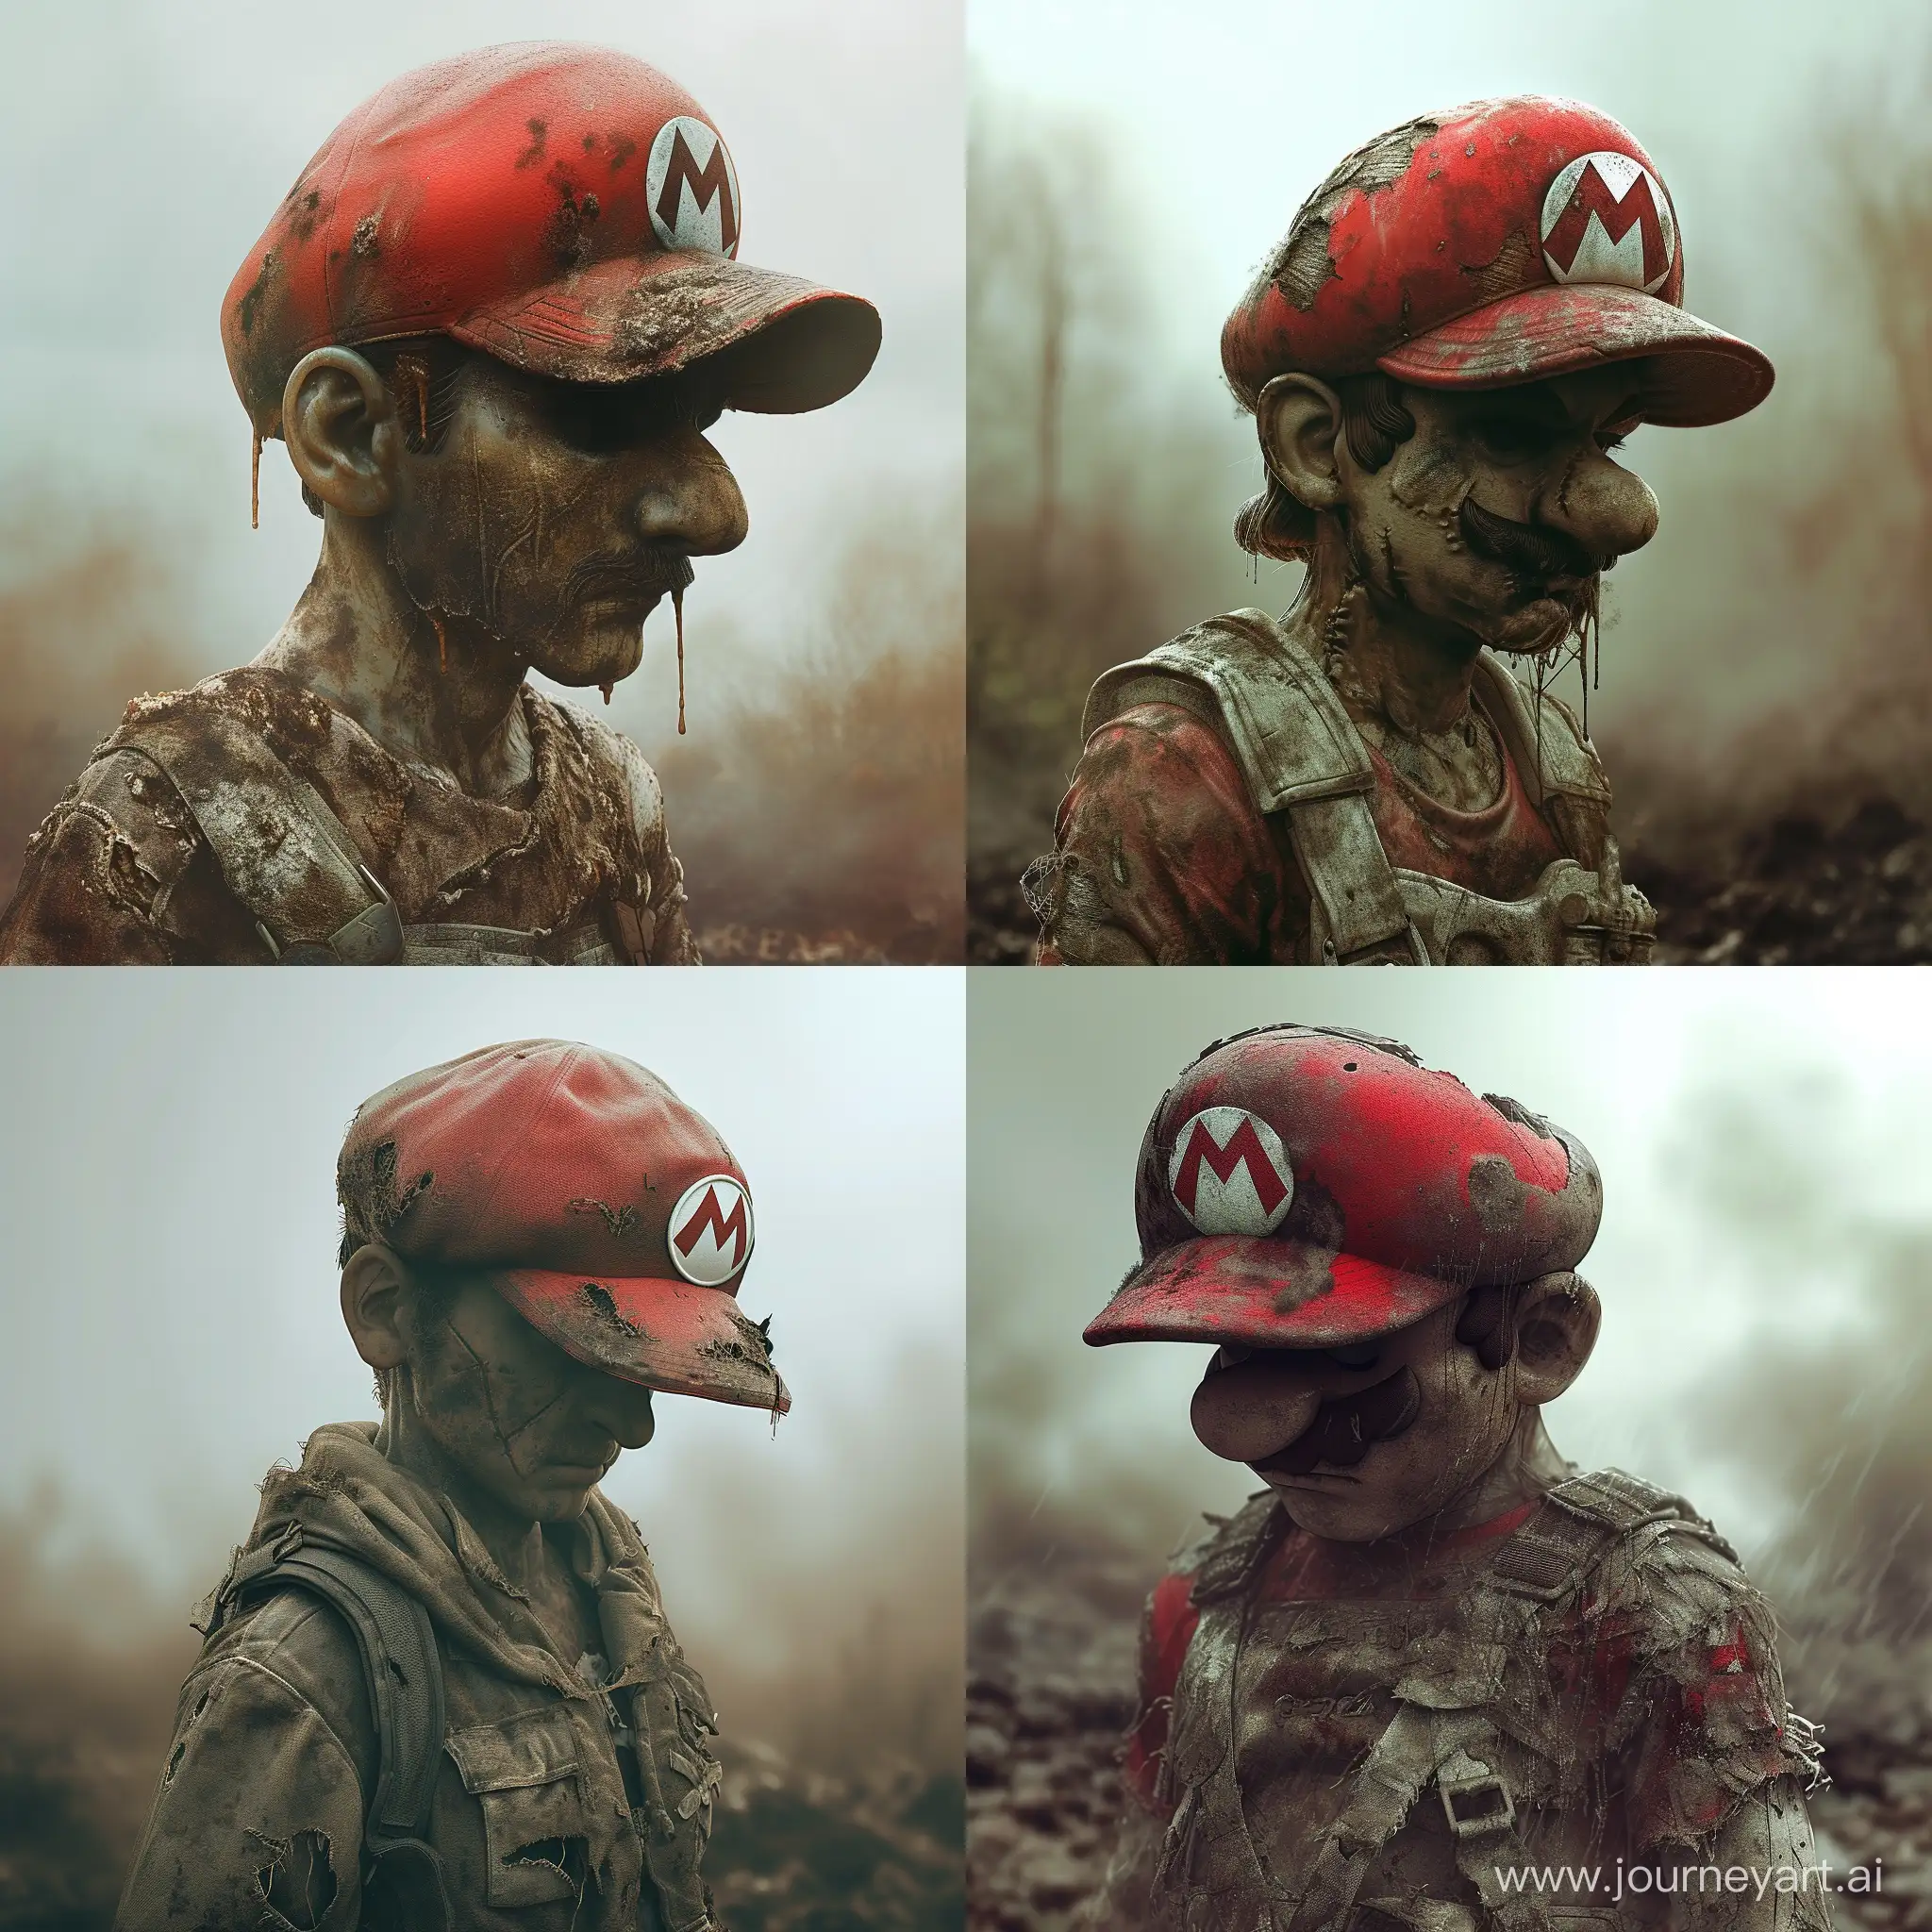 Gritty-Realistic-Mario-in-BattleWorn-Attire